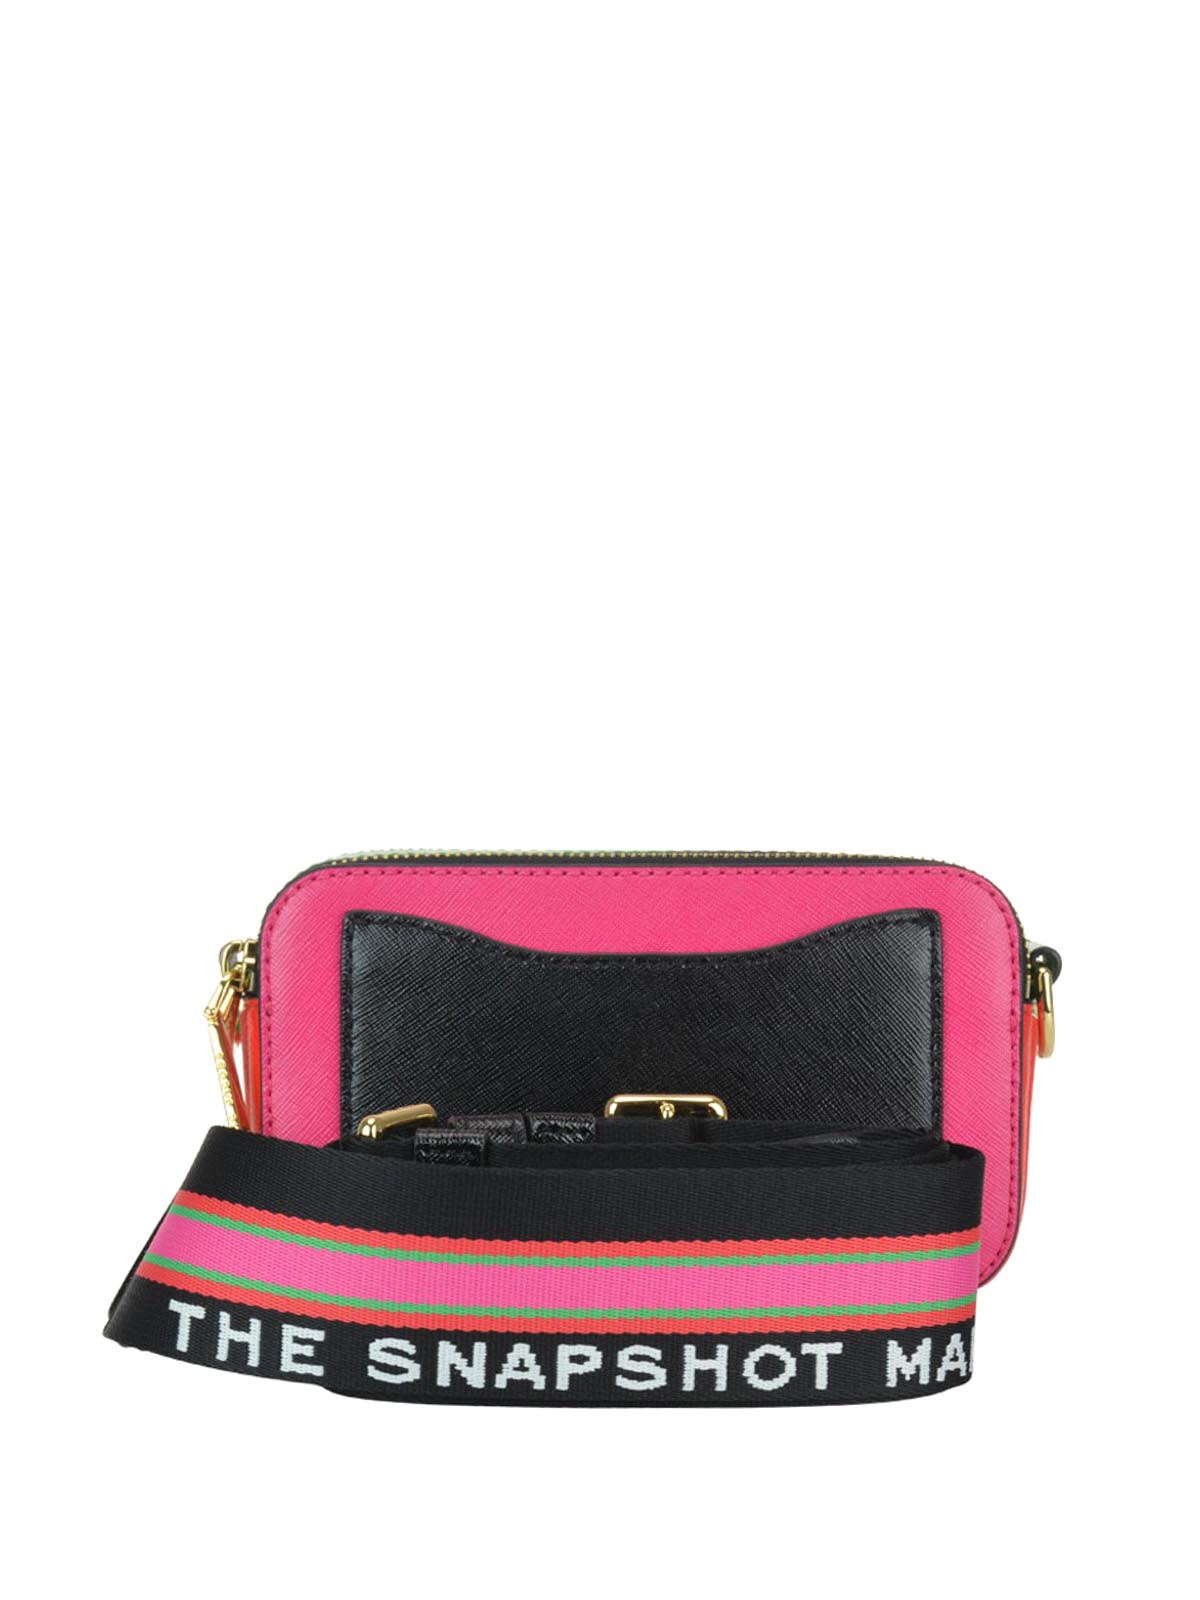 MARC JACOBS Snapshot Camera Bag - Beige for Women